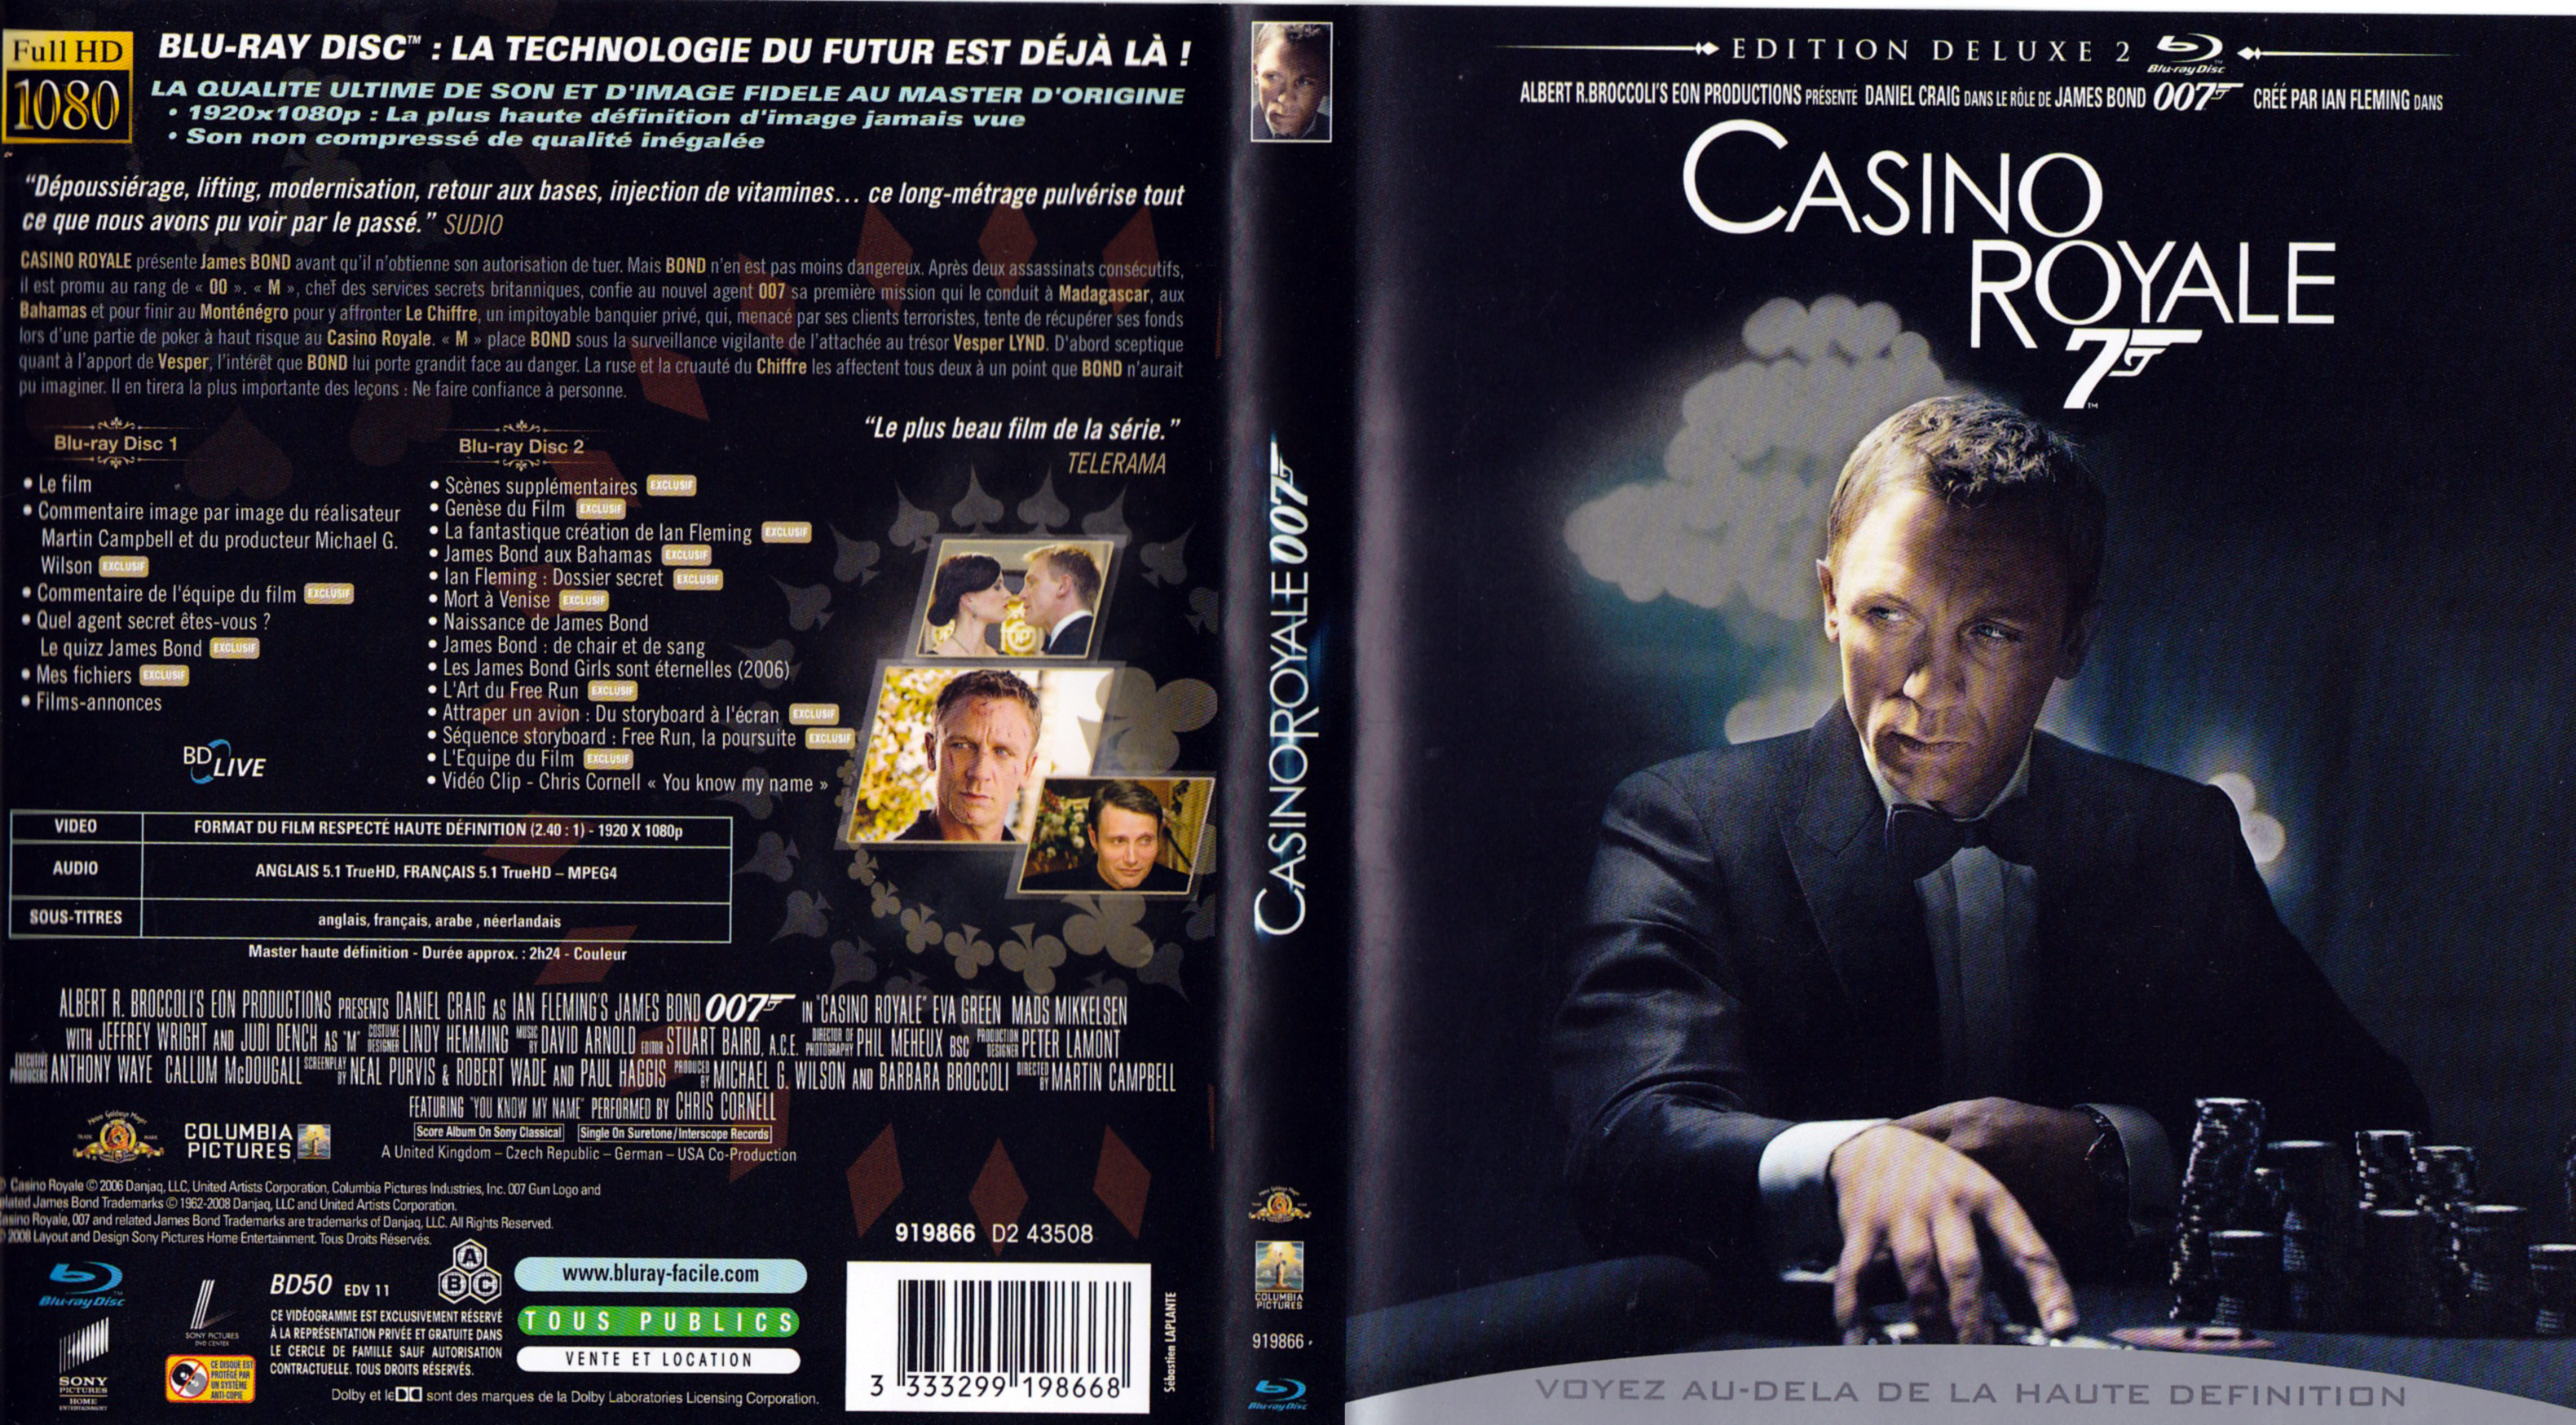 Jaquette DVD James Bond 007 Casino royale (BLU-RAY) v2